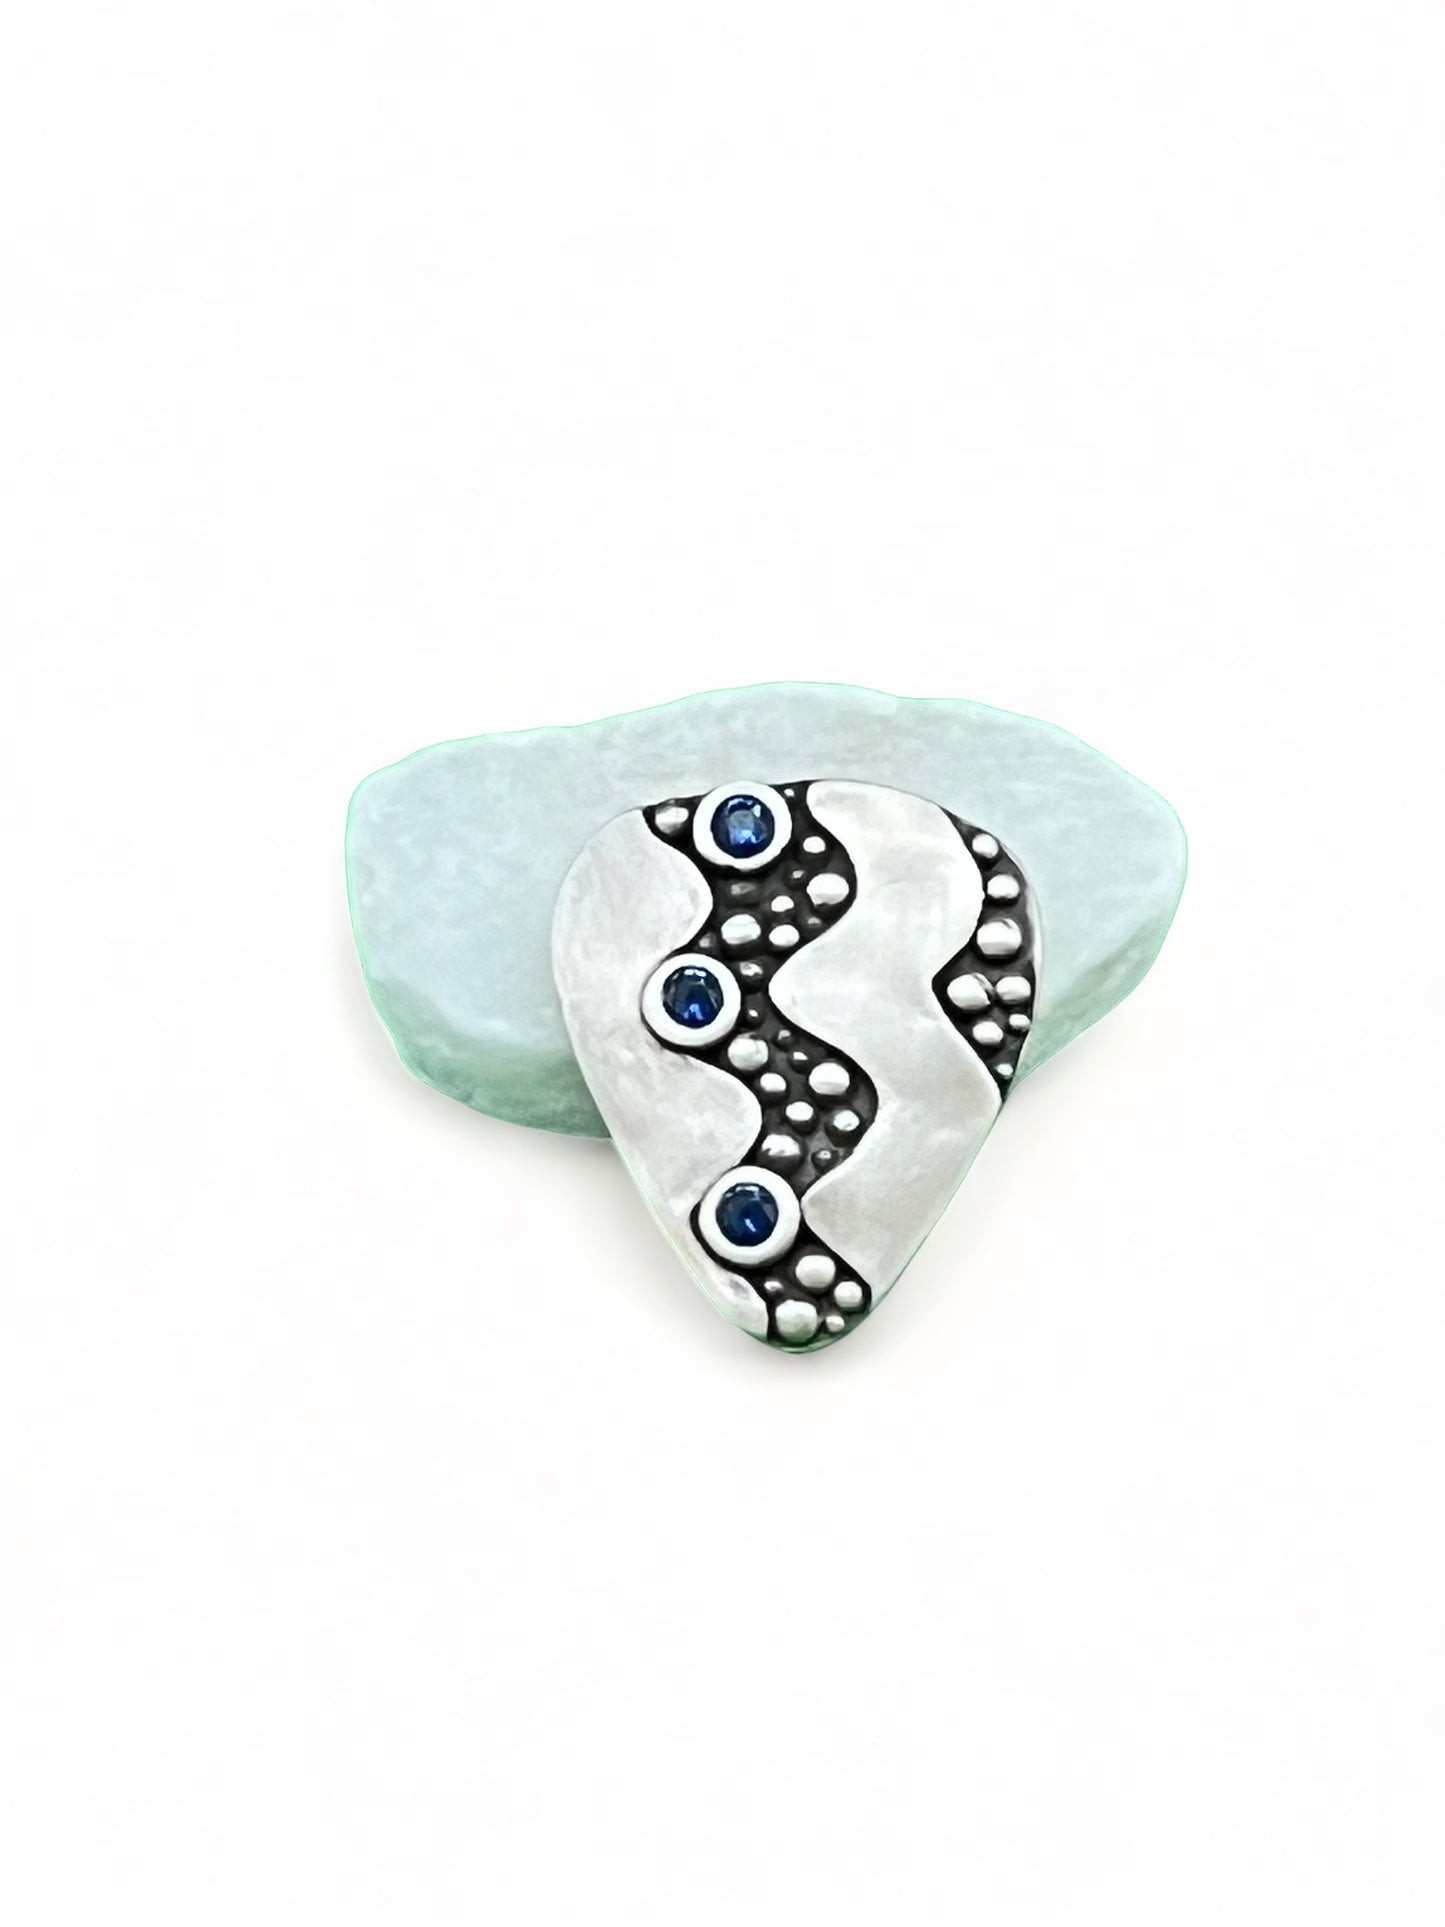 Two Rivers Pendant with Blue Sapphire Nano Gems .9999 Fine Silver Pendant